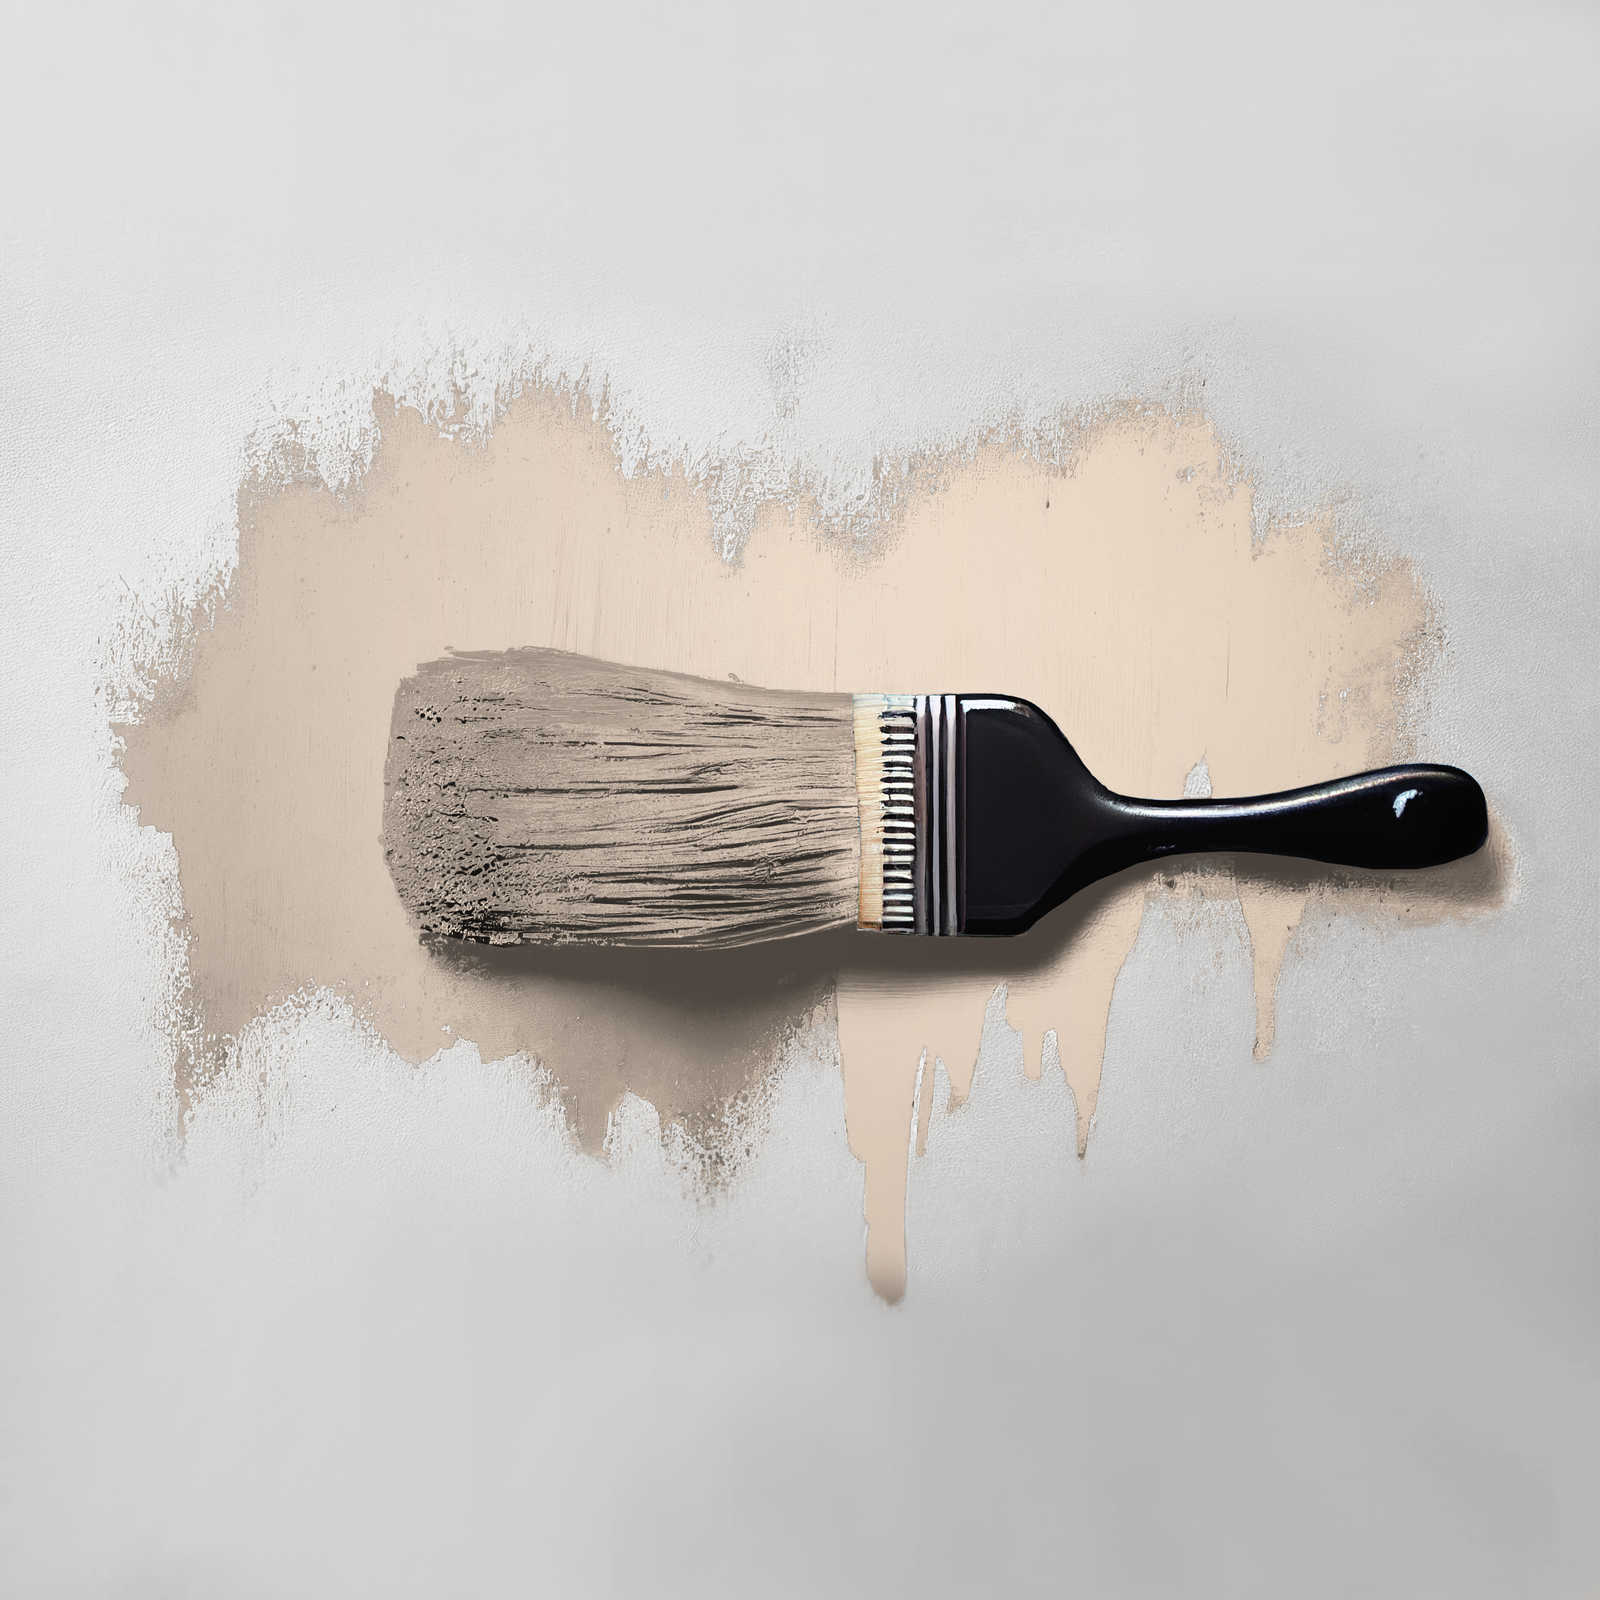             Pittura murale TCK6020 »Chalky Chickpeas« in beige chiaro fresco – 2,5 litri
        